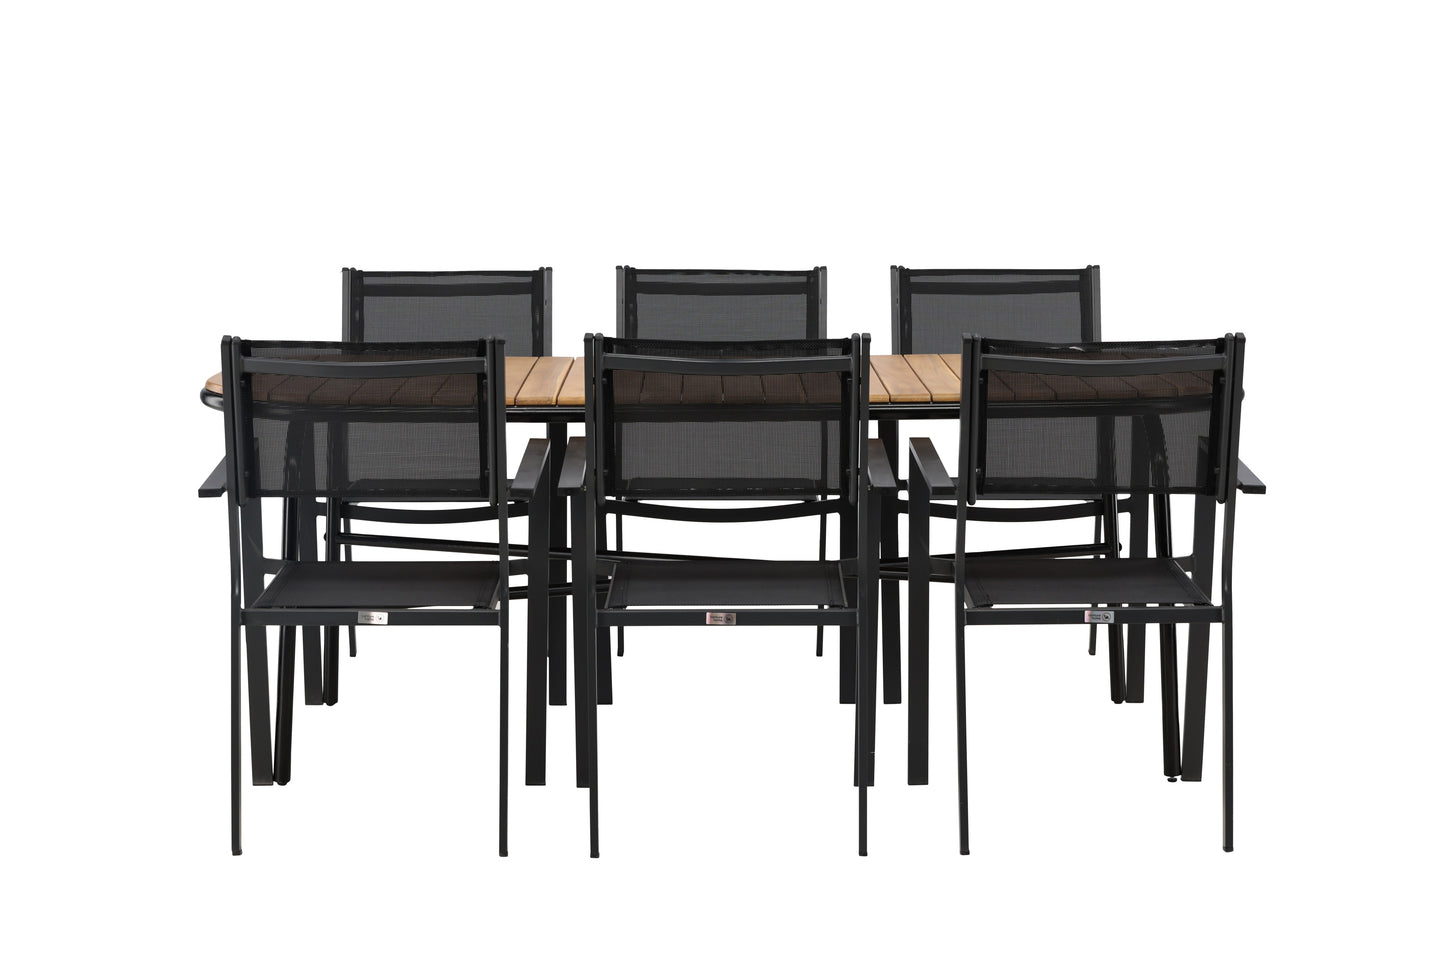 Holmbeck - Spisebord, Stål - Sort / Rektangulær 90*200*75 + Copacabana Stabelbar stol - Sort